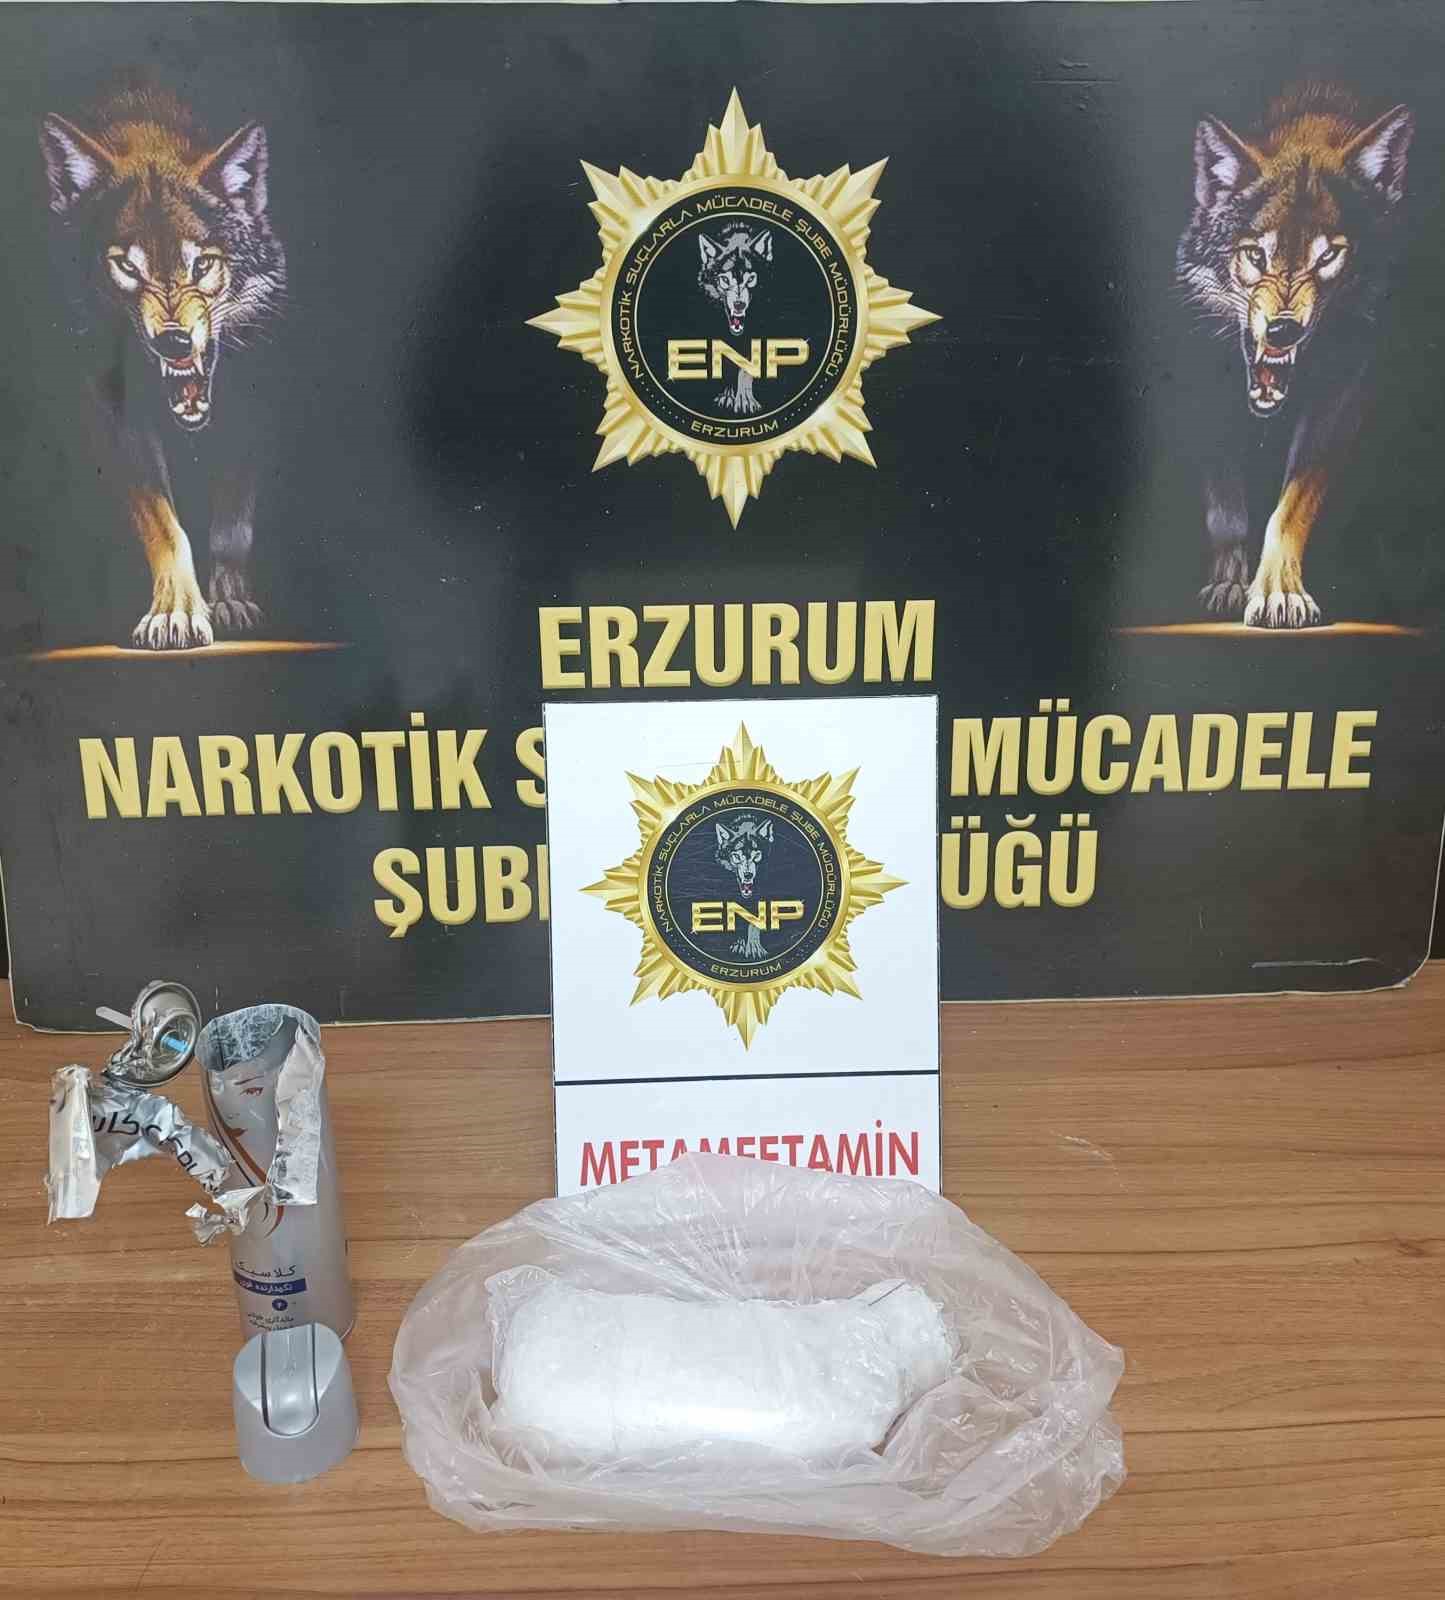 Erzurum’da 343 gram metamfetami  yakalandı